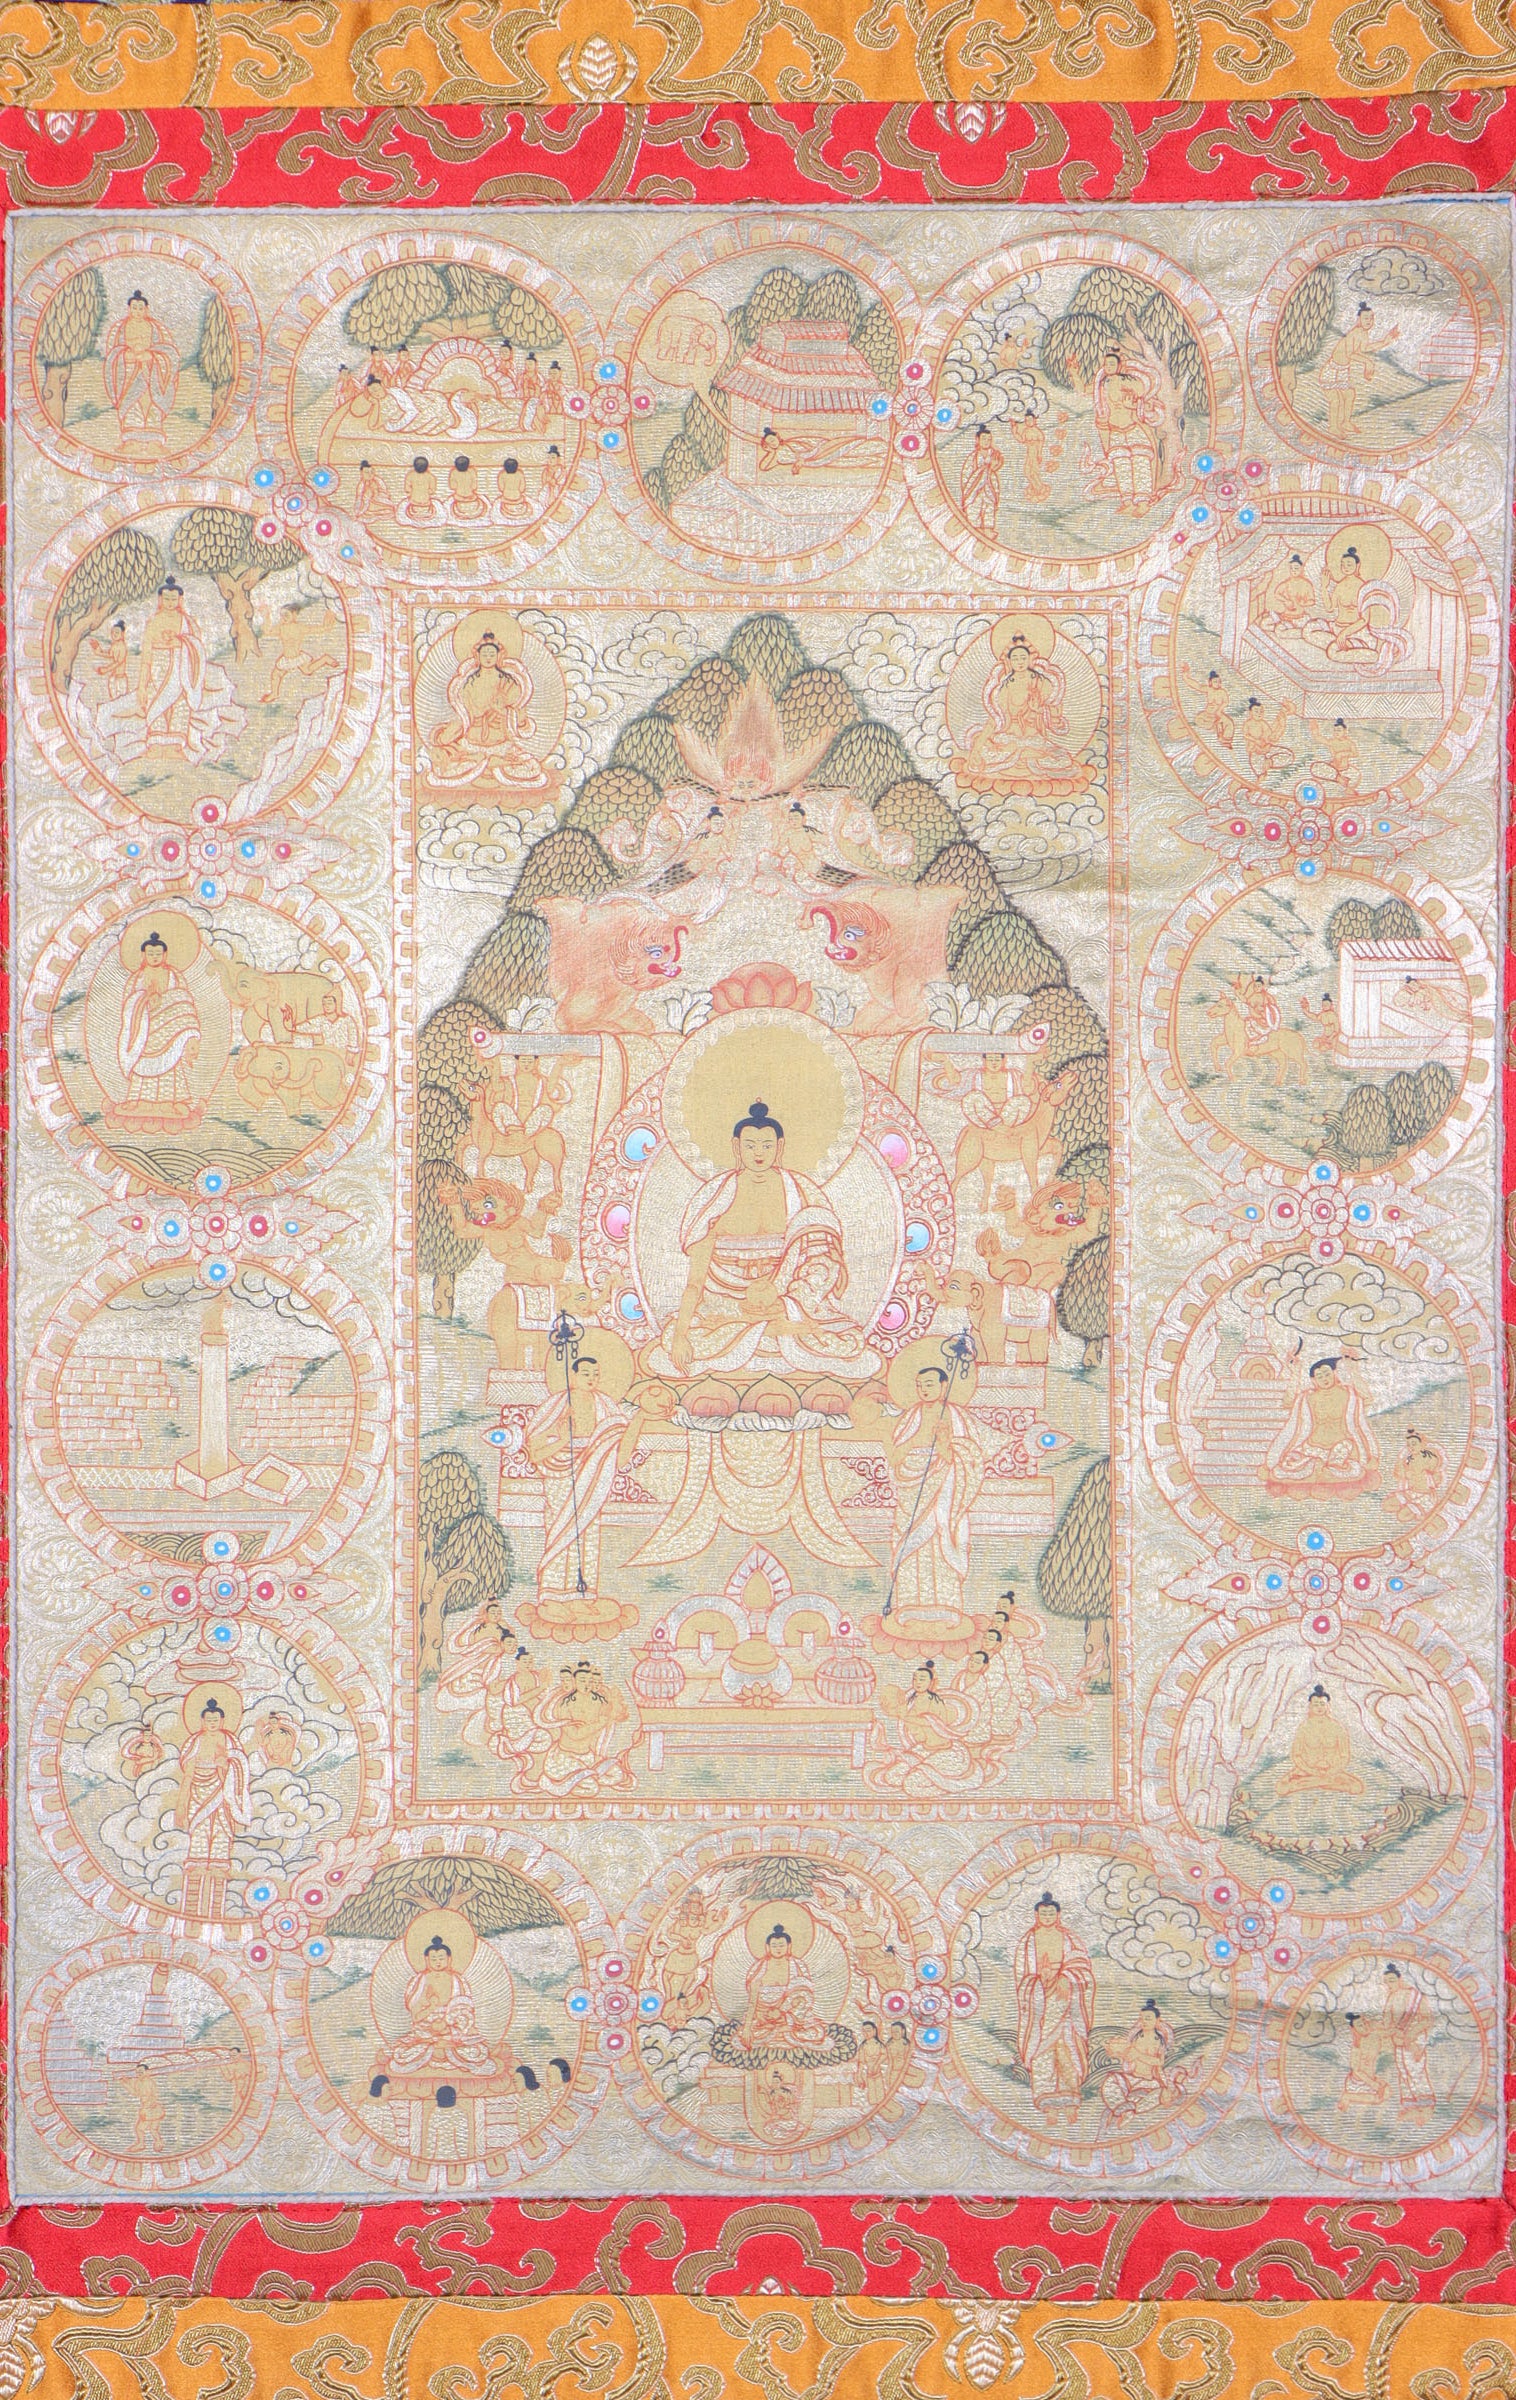 Shakyamuni Buddha Brocade Thangka Painting for Enlightment.